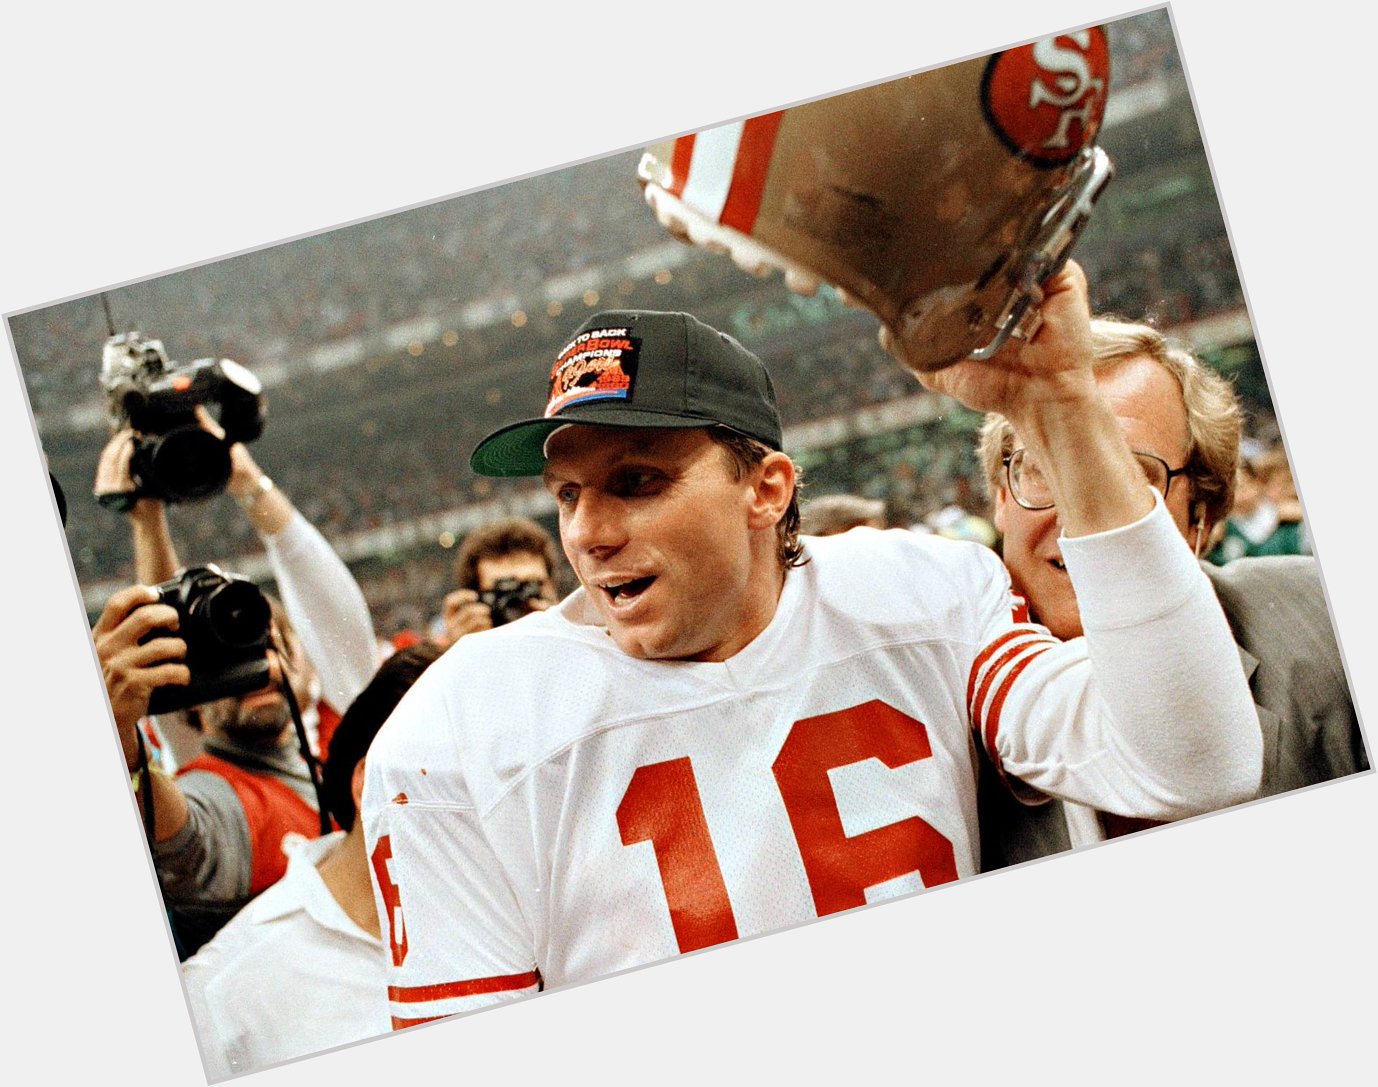 Wishing a happy 59th birthday to legendary quarterback Joe Montana! 